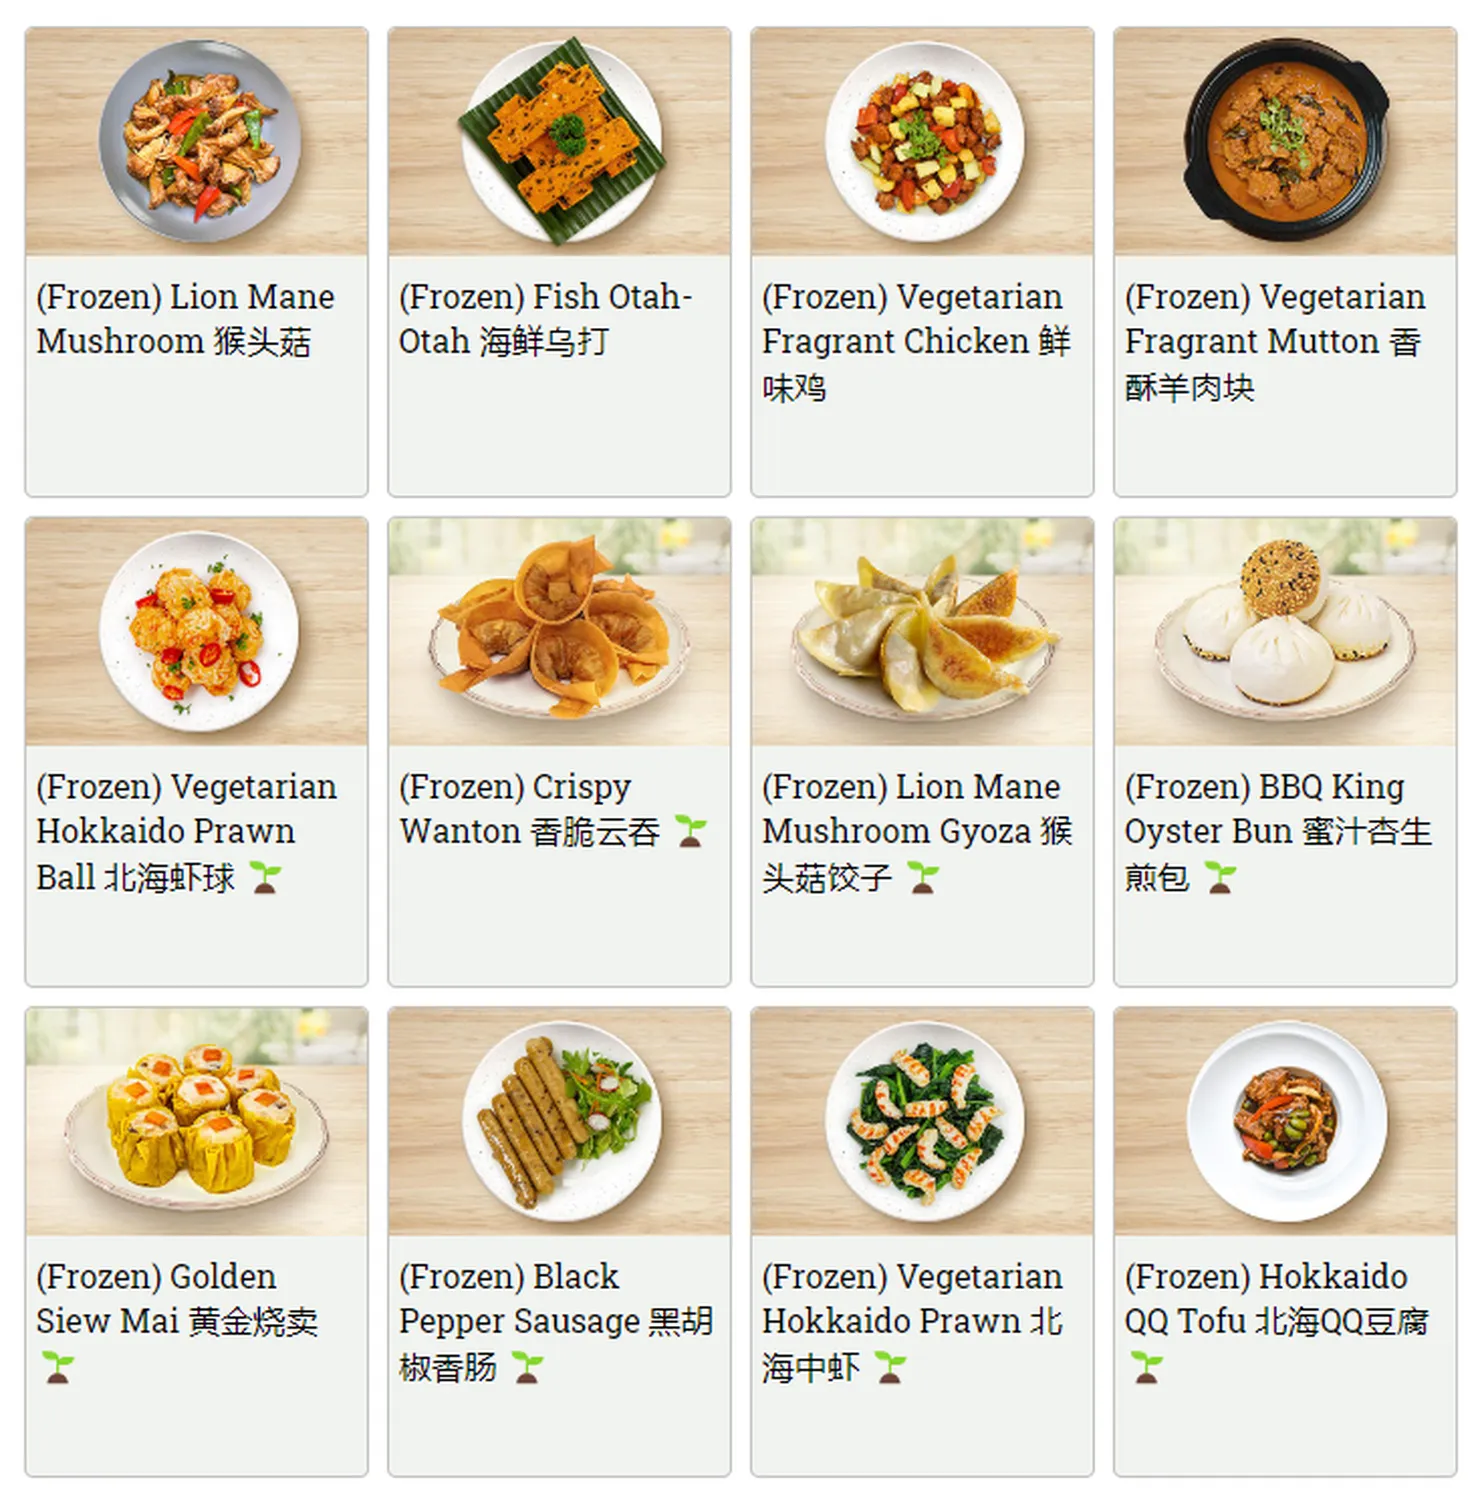 greendot menu singapore frozen series